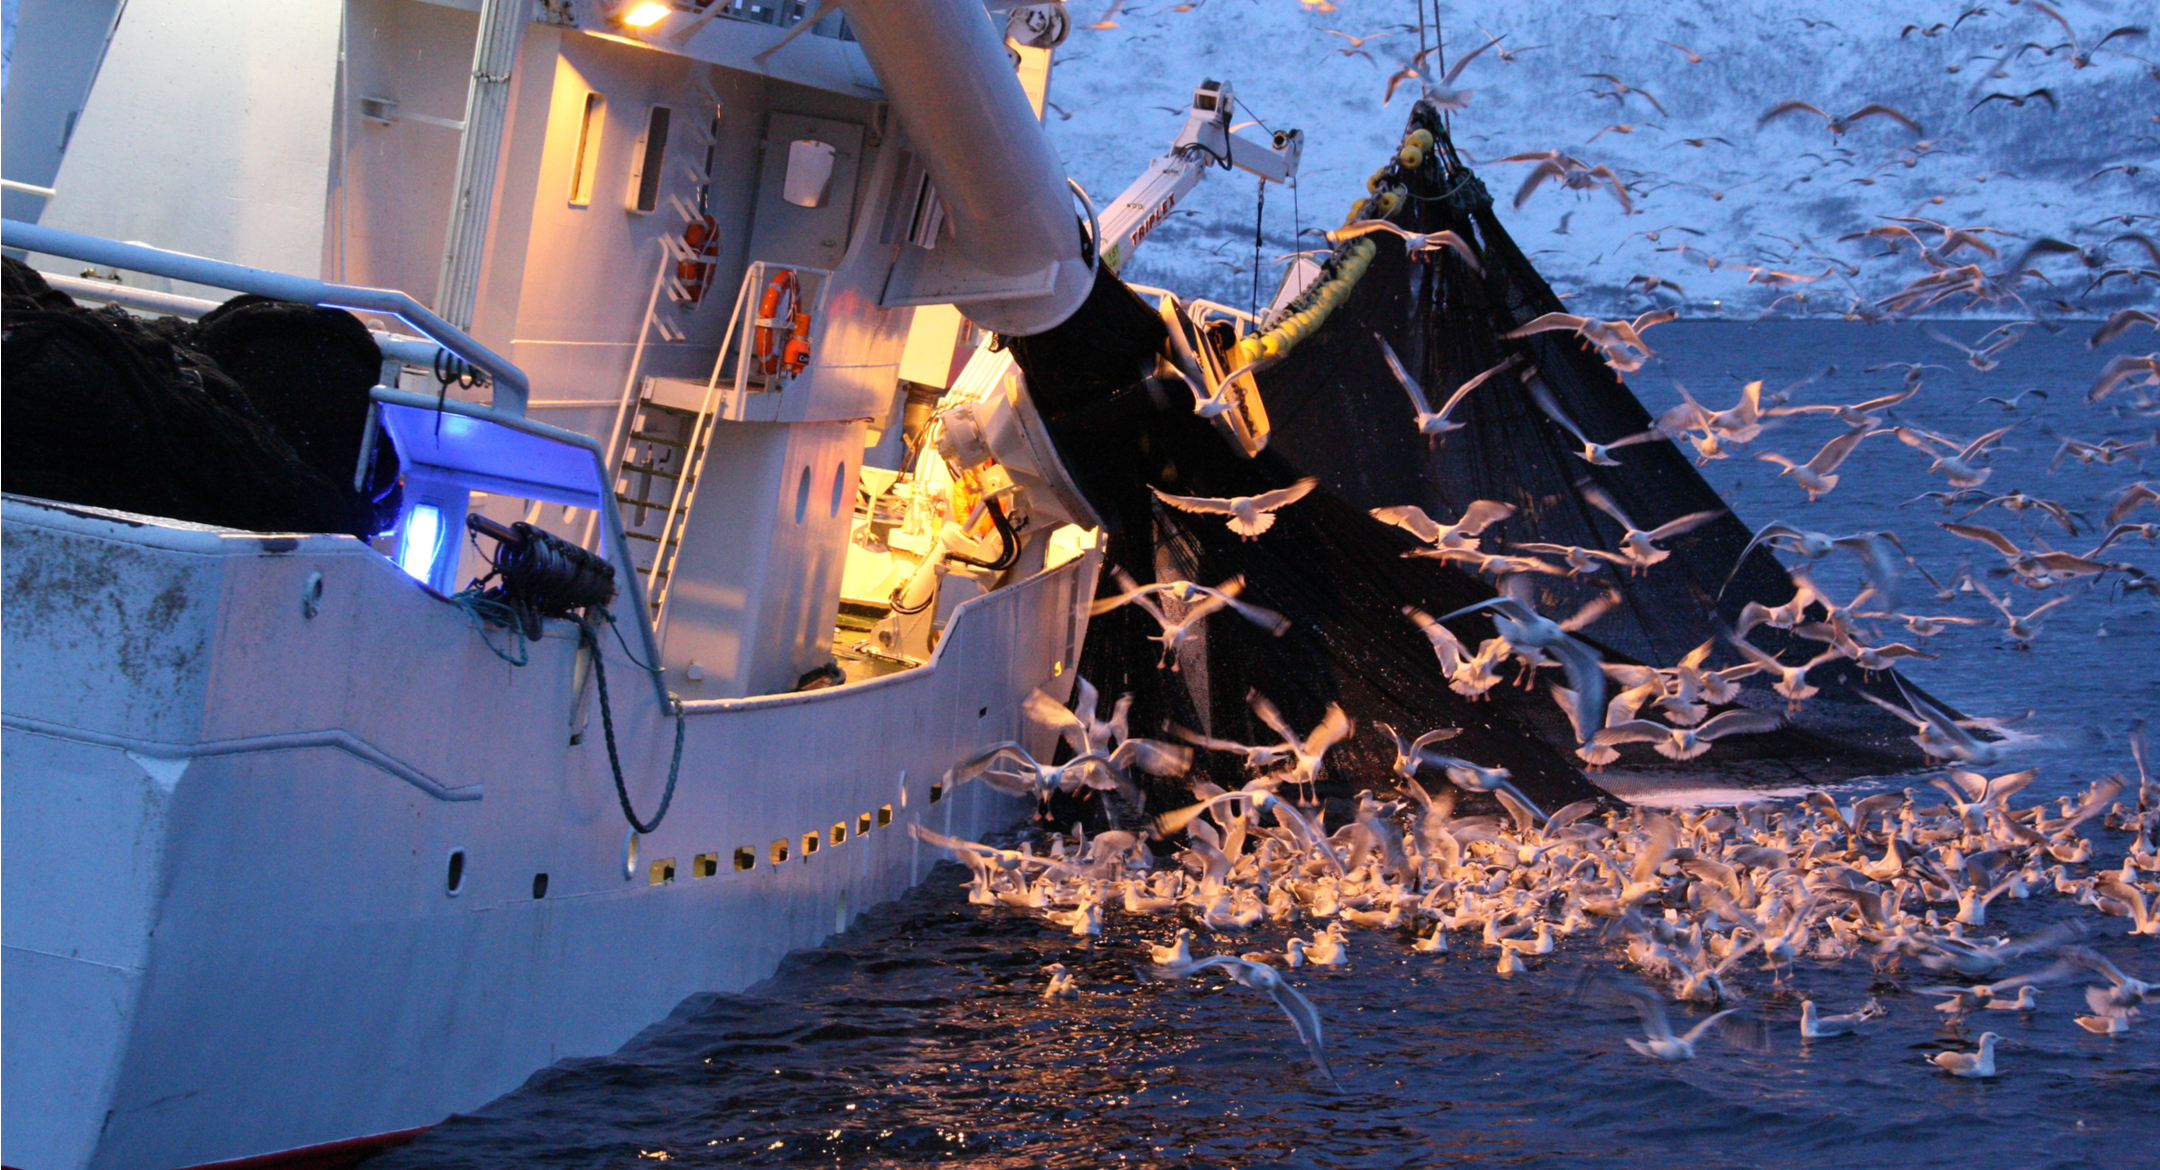 Vessel fishing for herring in Kaldfjord, Tromso, Norway. Credit: Alessandro De Maddalena/Shutterstock.com